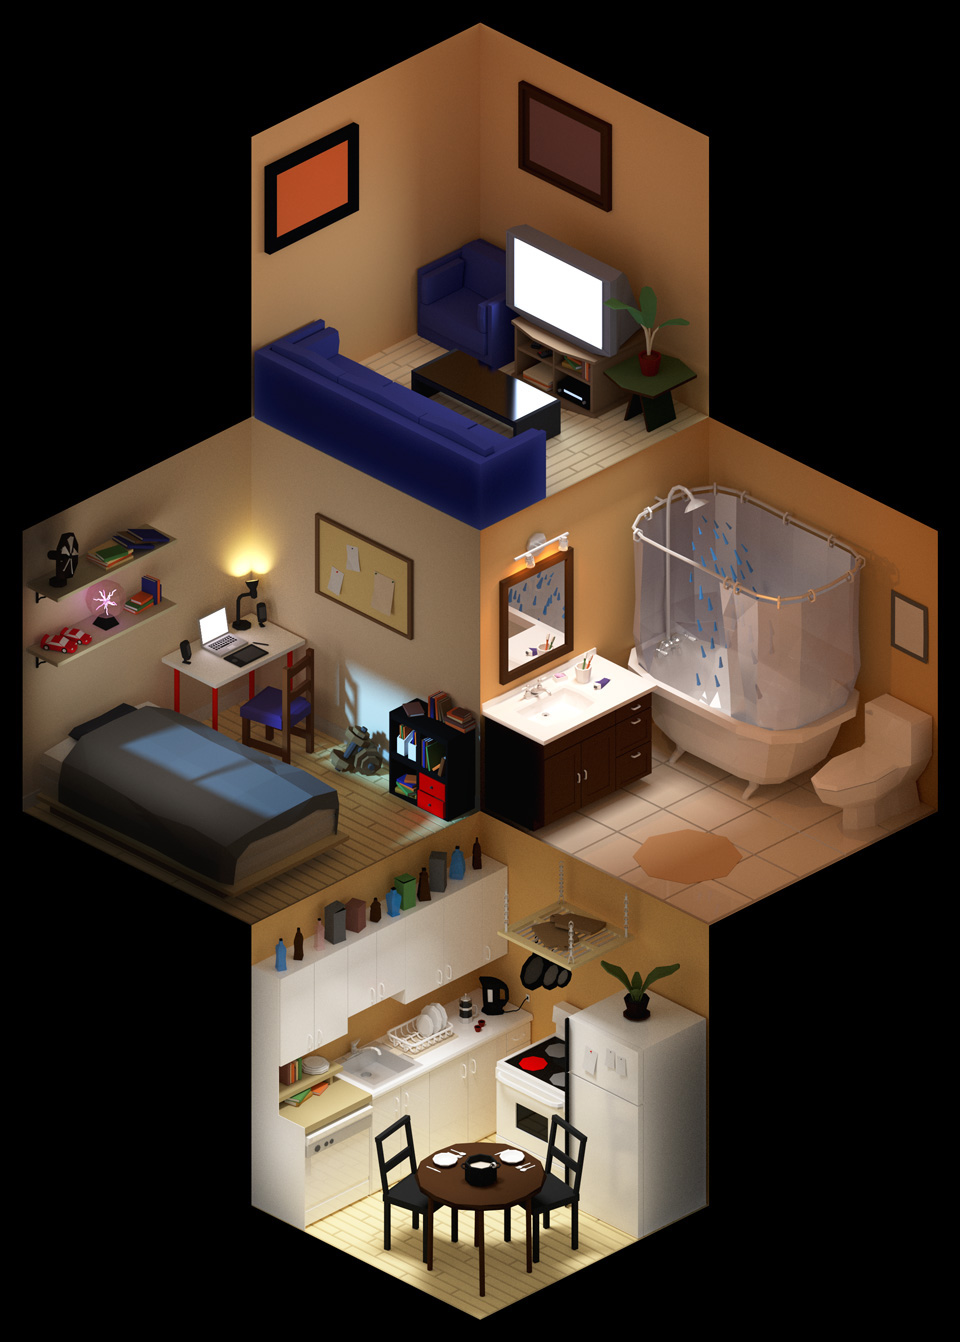 Interior living space apartment flat space blender 3D CGI kitchen living room bedroom bathroom